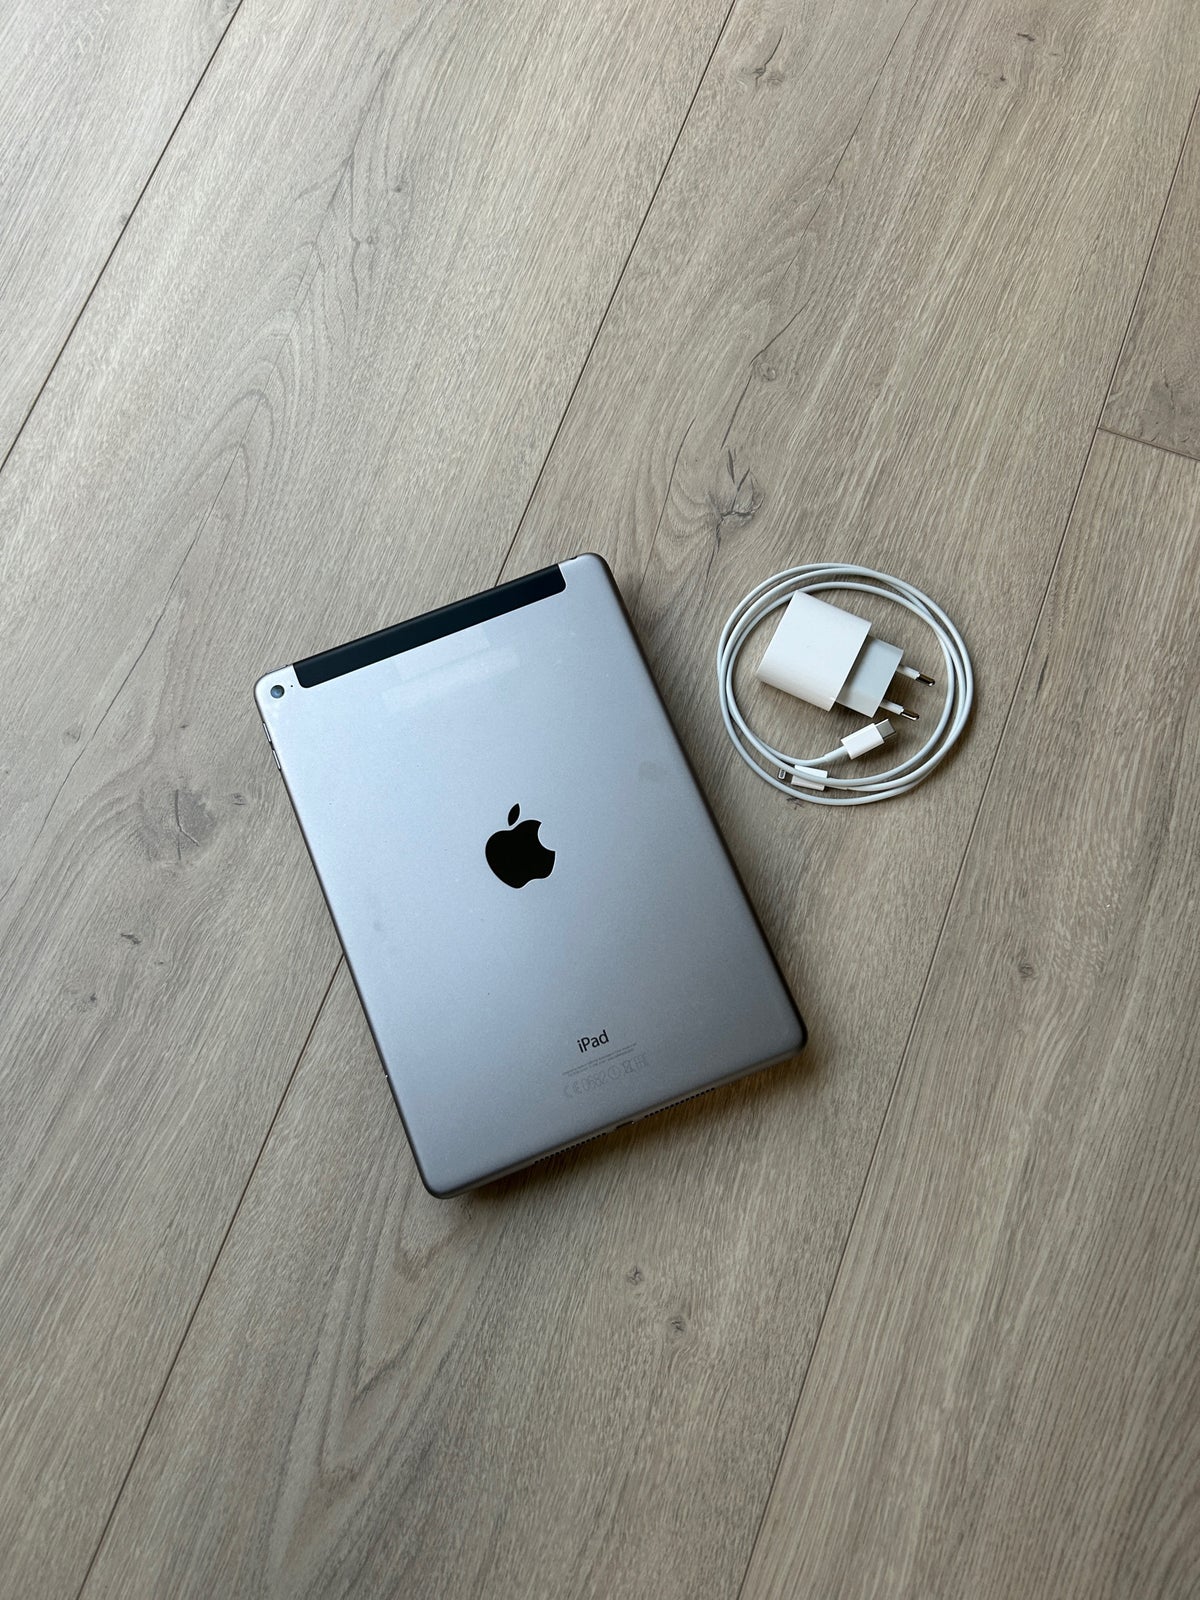 iPad Air 2, 16 GB, sort